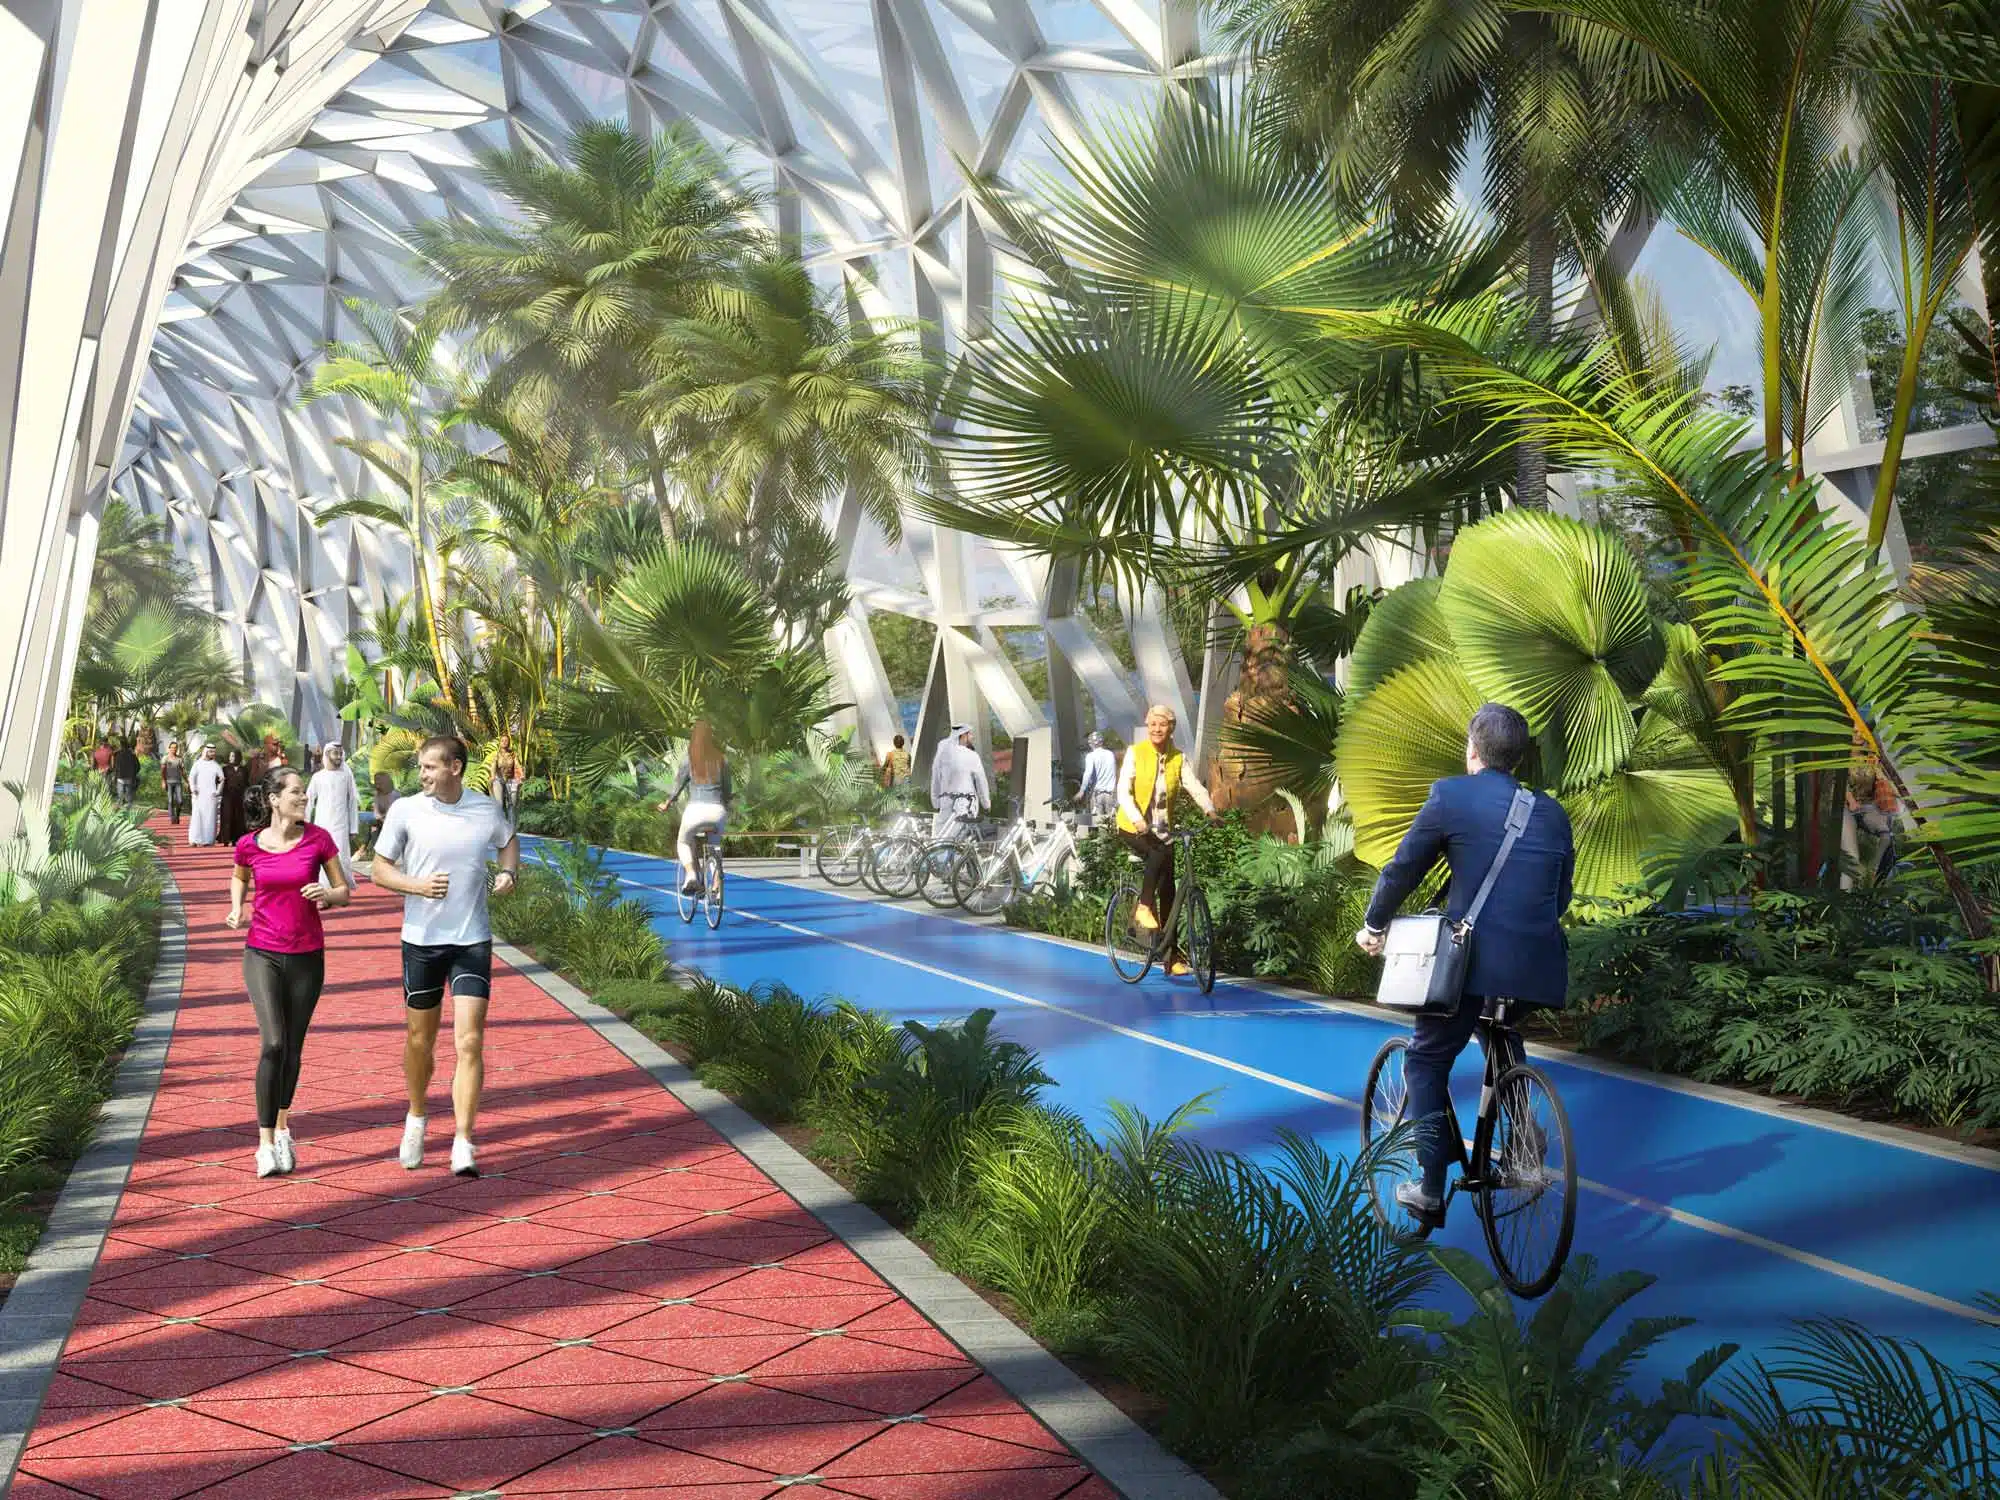 93-Kilometer Indoor Cycling Super Highway Planned in Dubai